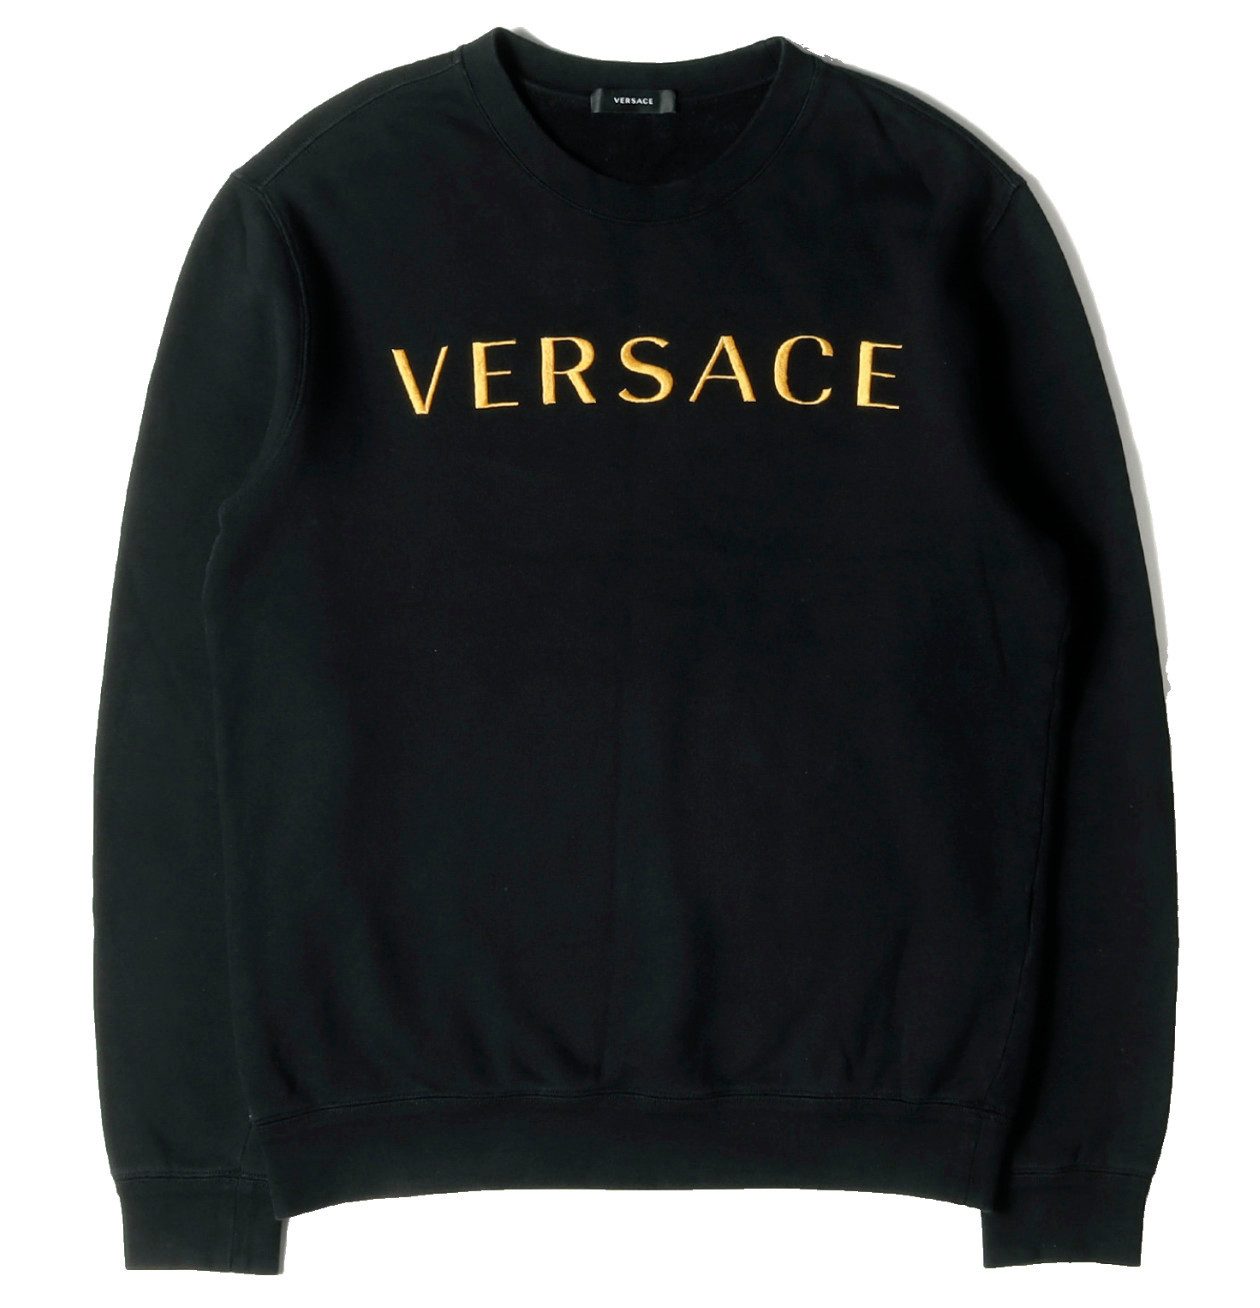 Versace Sweatshirt Sweatshirt Brushed Embroidery Logo Gold Sweater Pullover Jumper